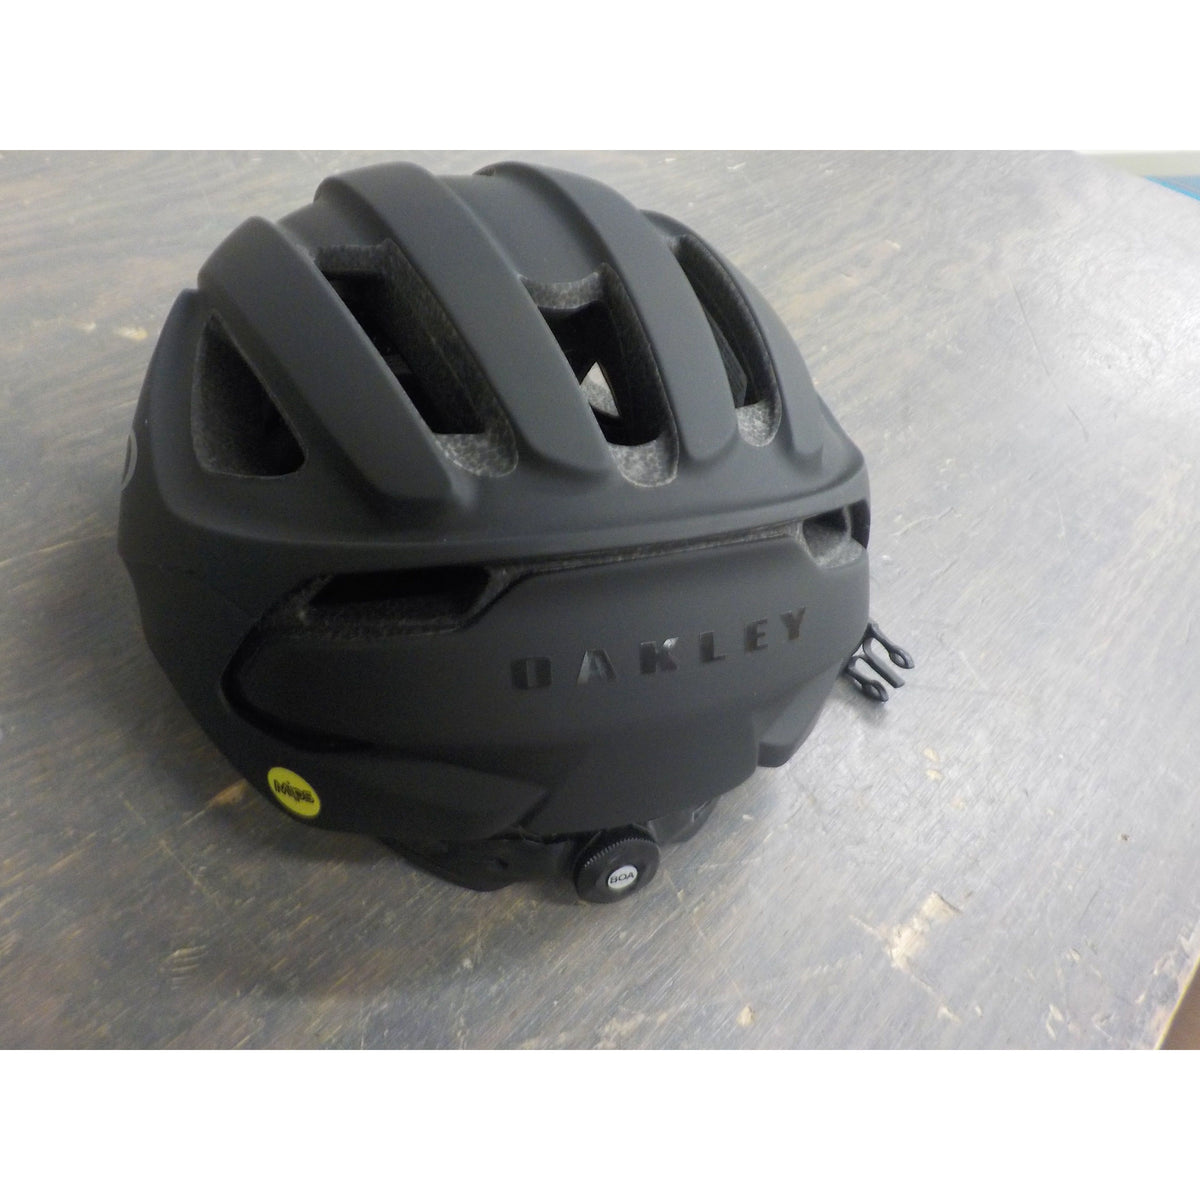 Oakley ARO3 Helmet - Blackout - Large - Used - Good